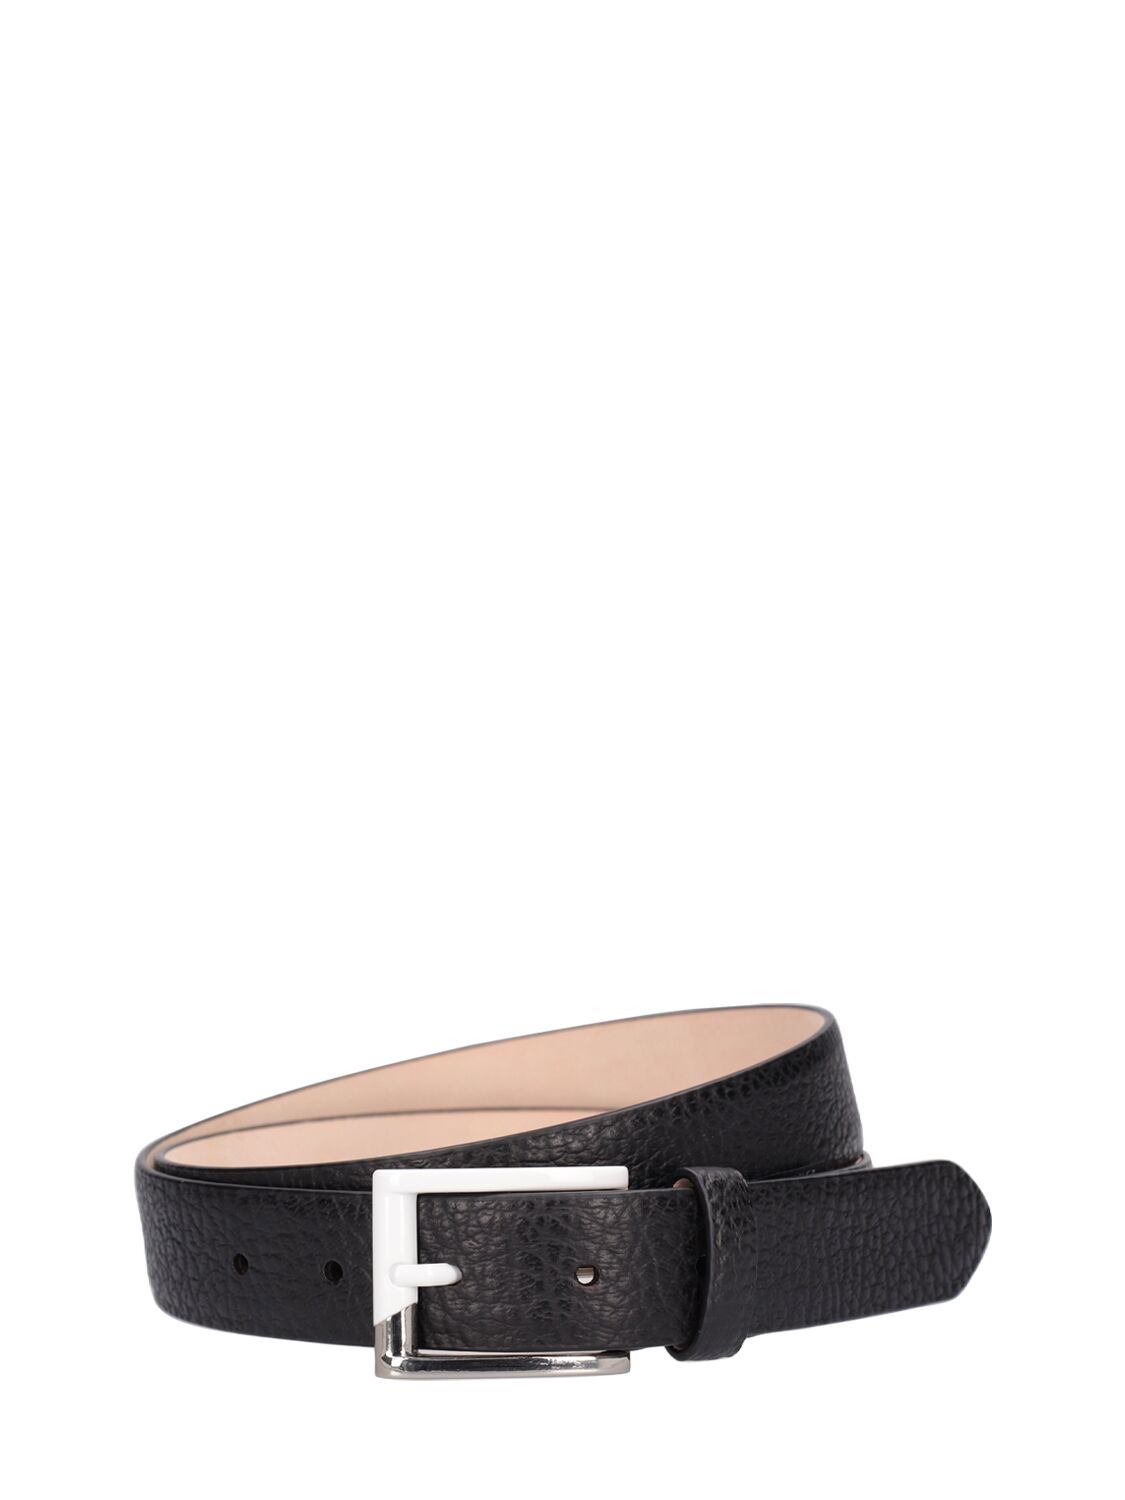 Image of Enameled Buckle Leather Belt